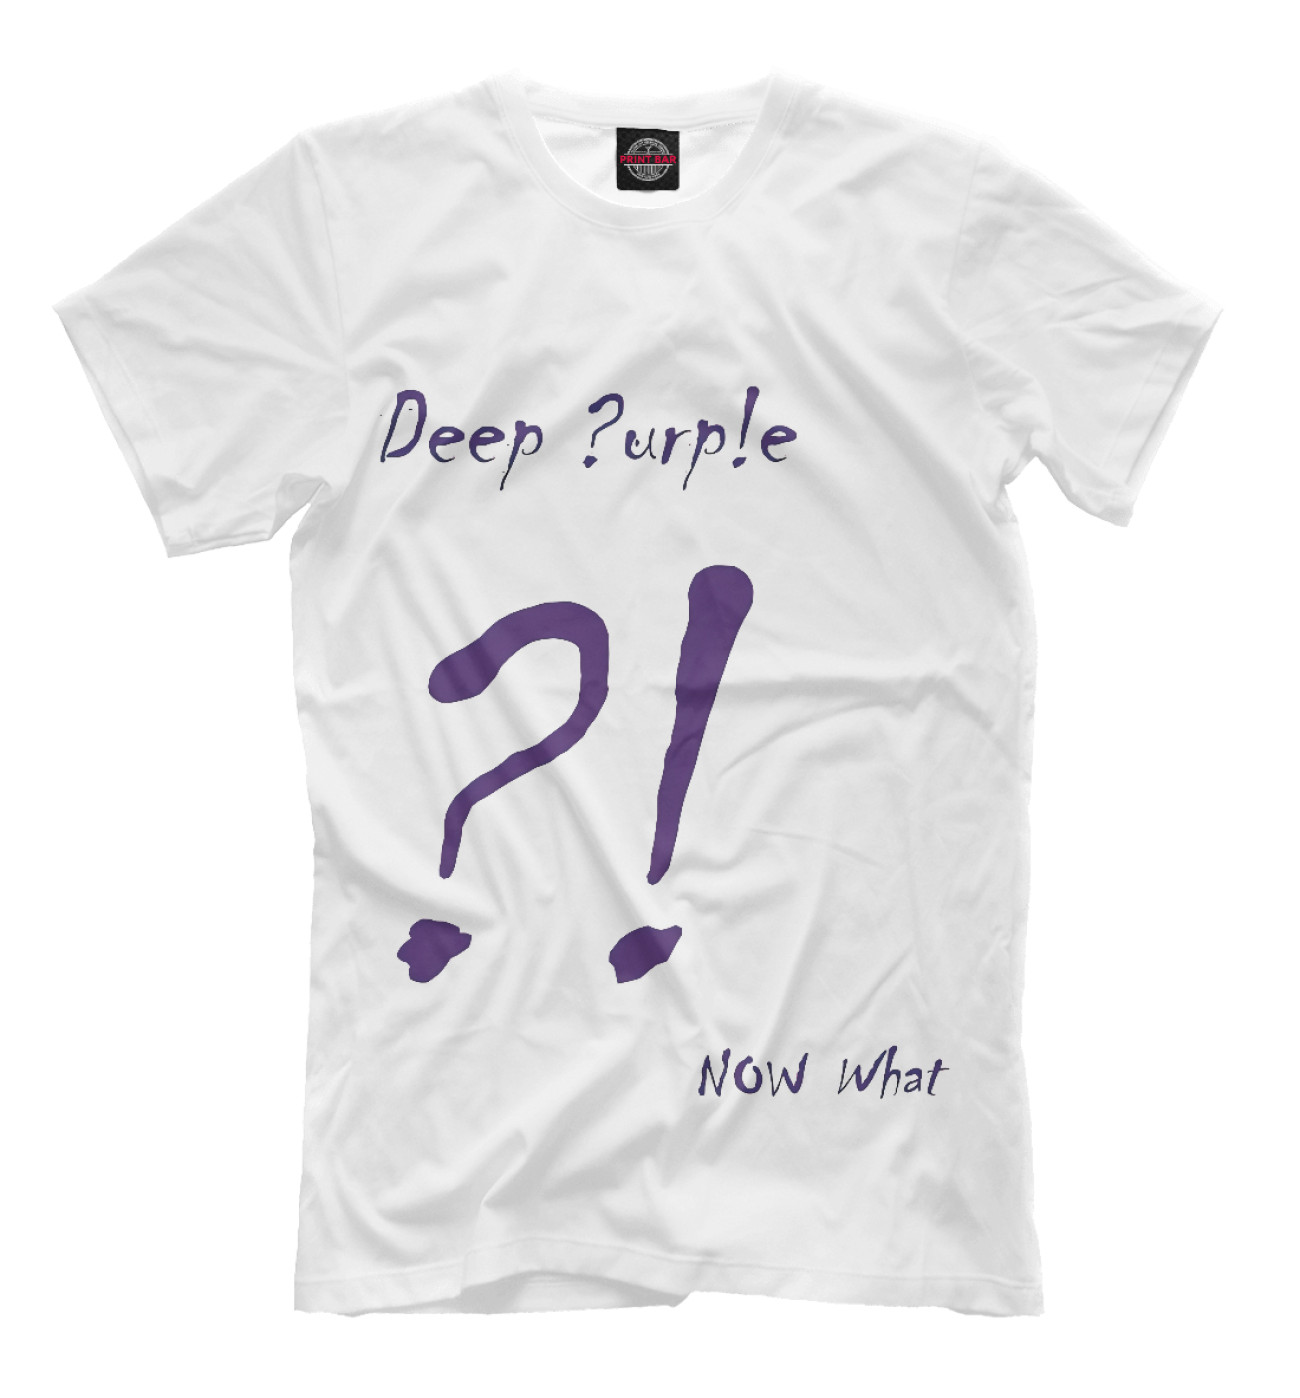 Мужская Футболка Deep Purple, артикул: PUR-512341-fut-2